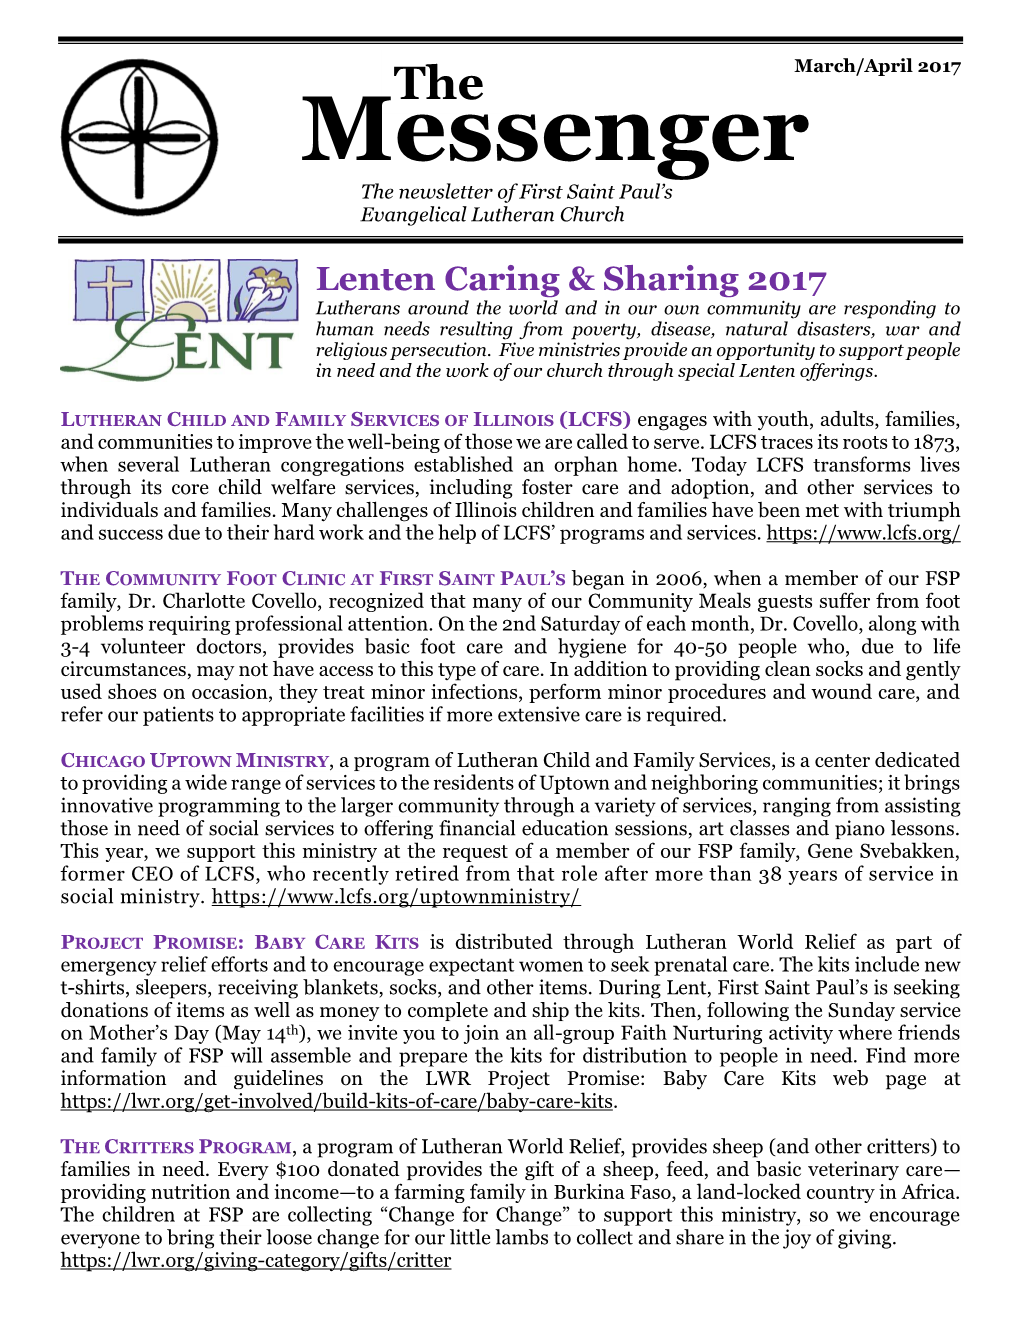 Messenger the Newsletter of First Saint Paul’S Evangelical Lutheran Church